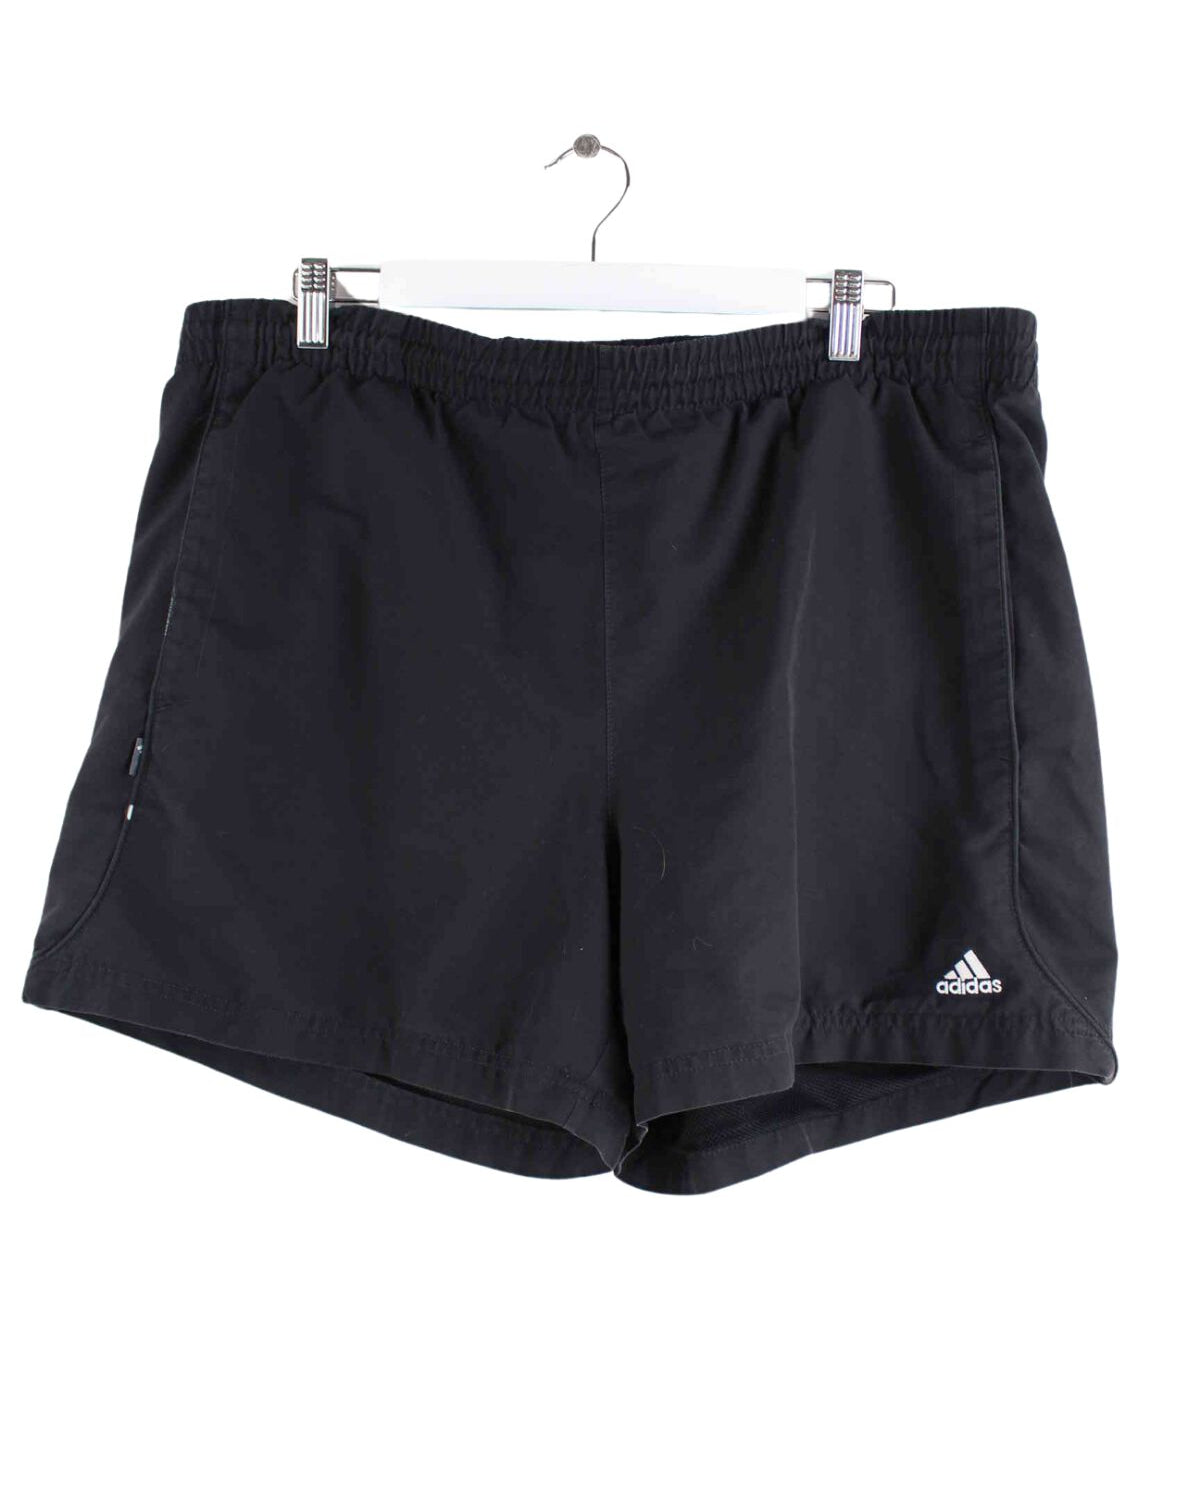 Adidas Damen Shorts Schwarz L (front image)